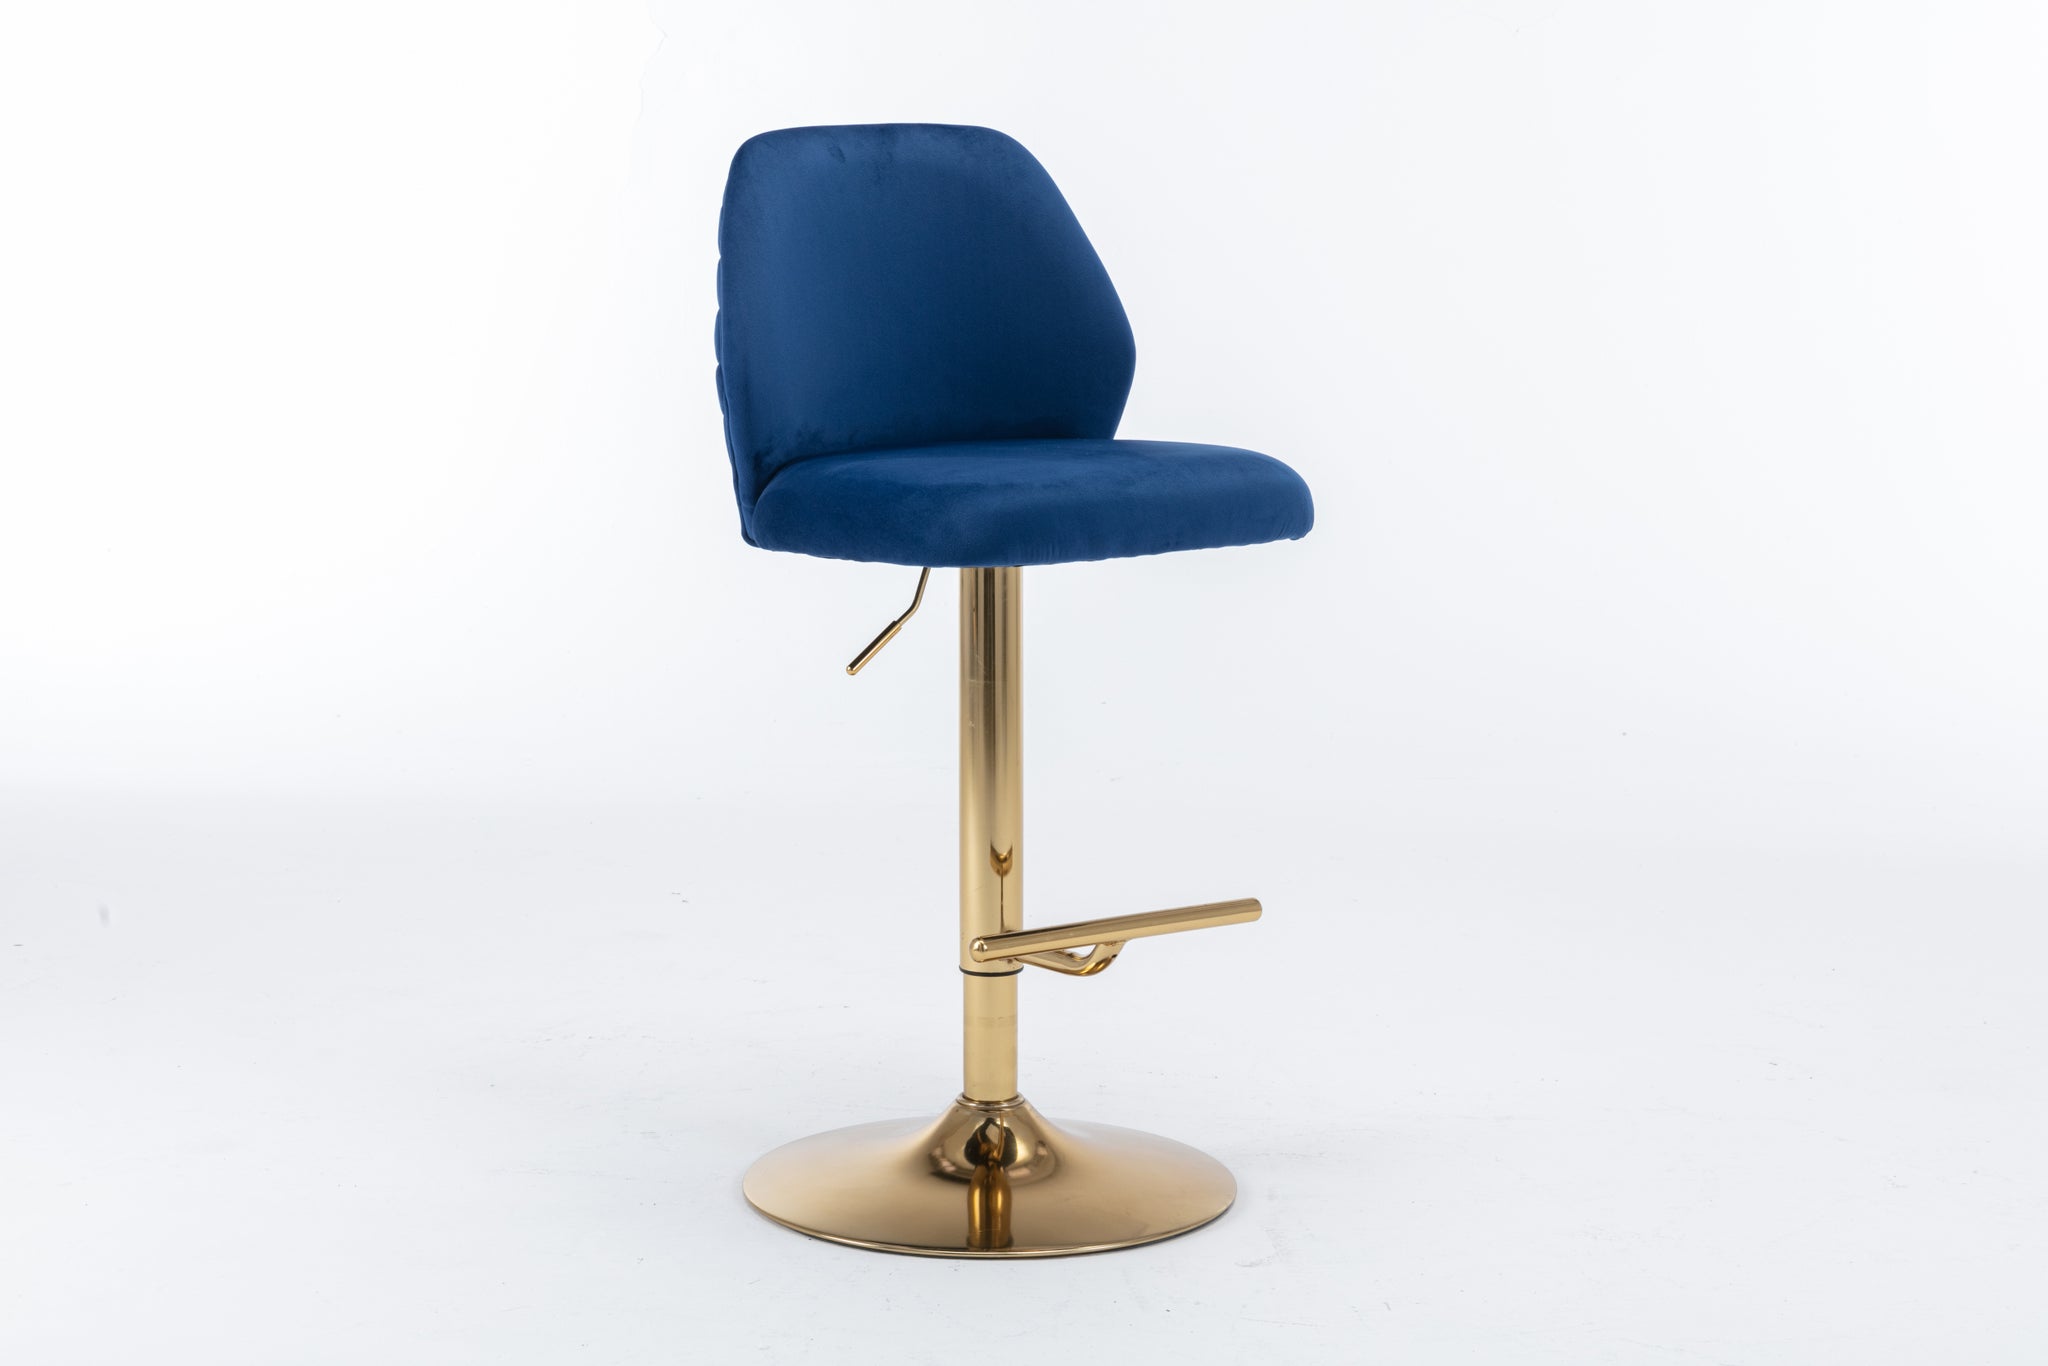 Swivel Bar Stools Chair Set of 2 Modern Adjustable navy blue-foam-fabric